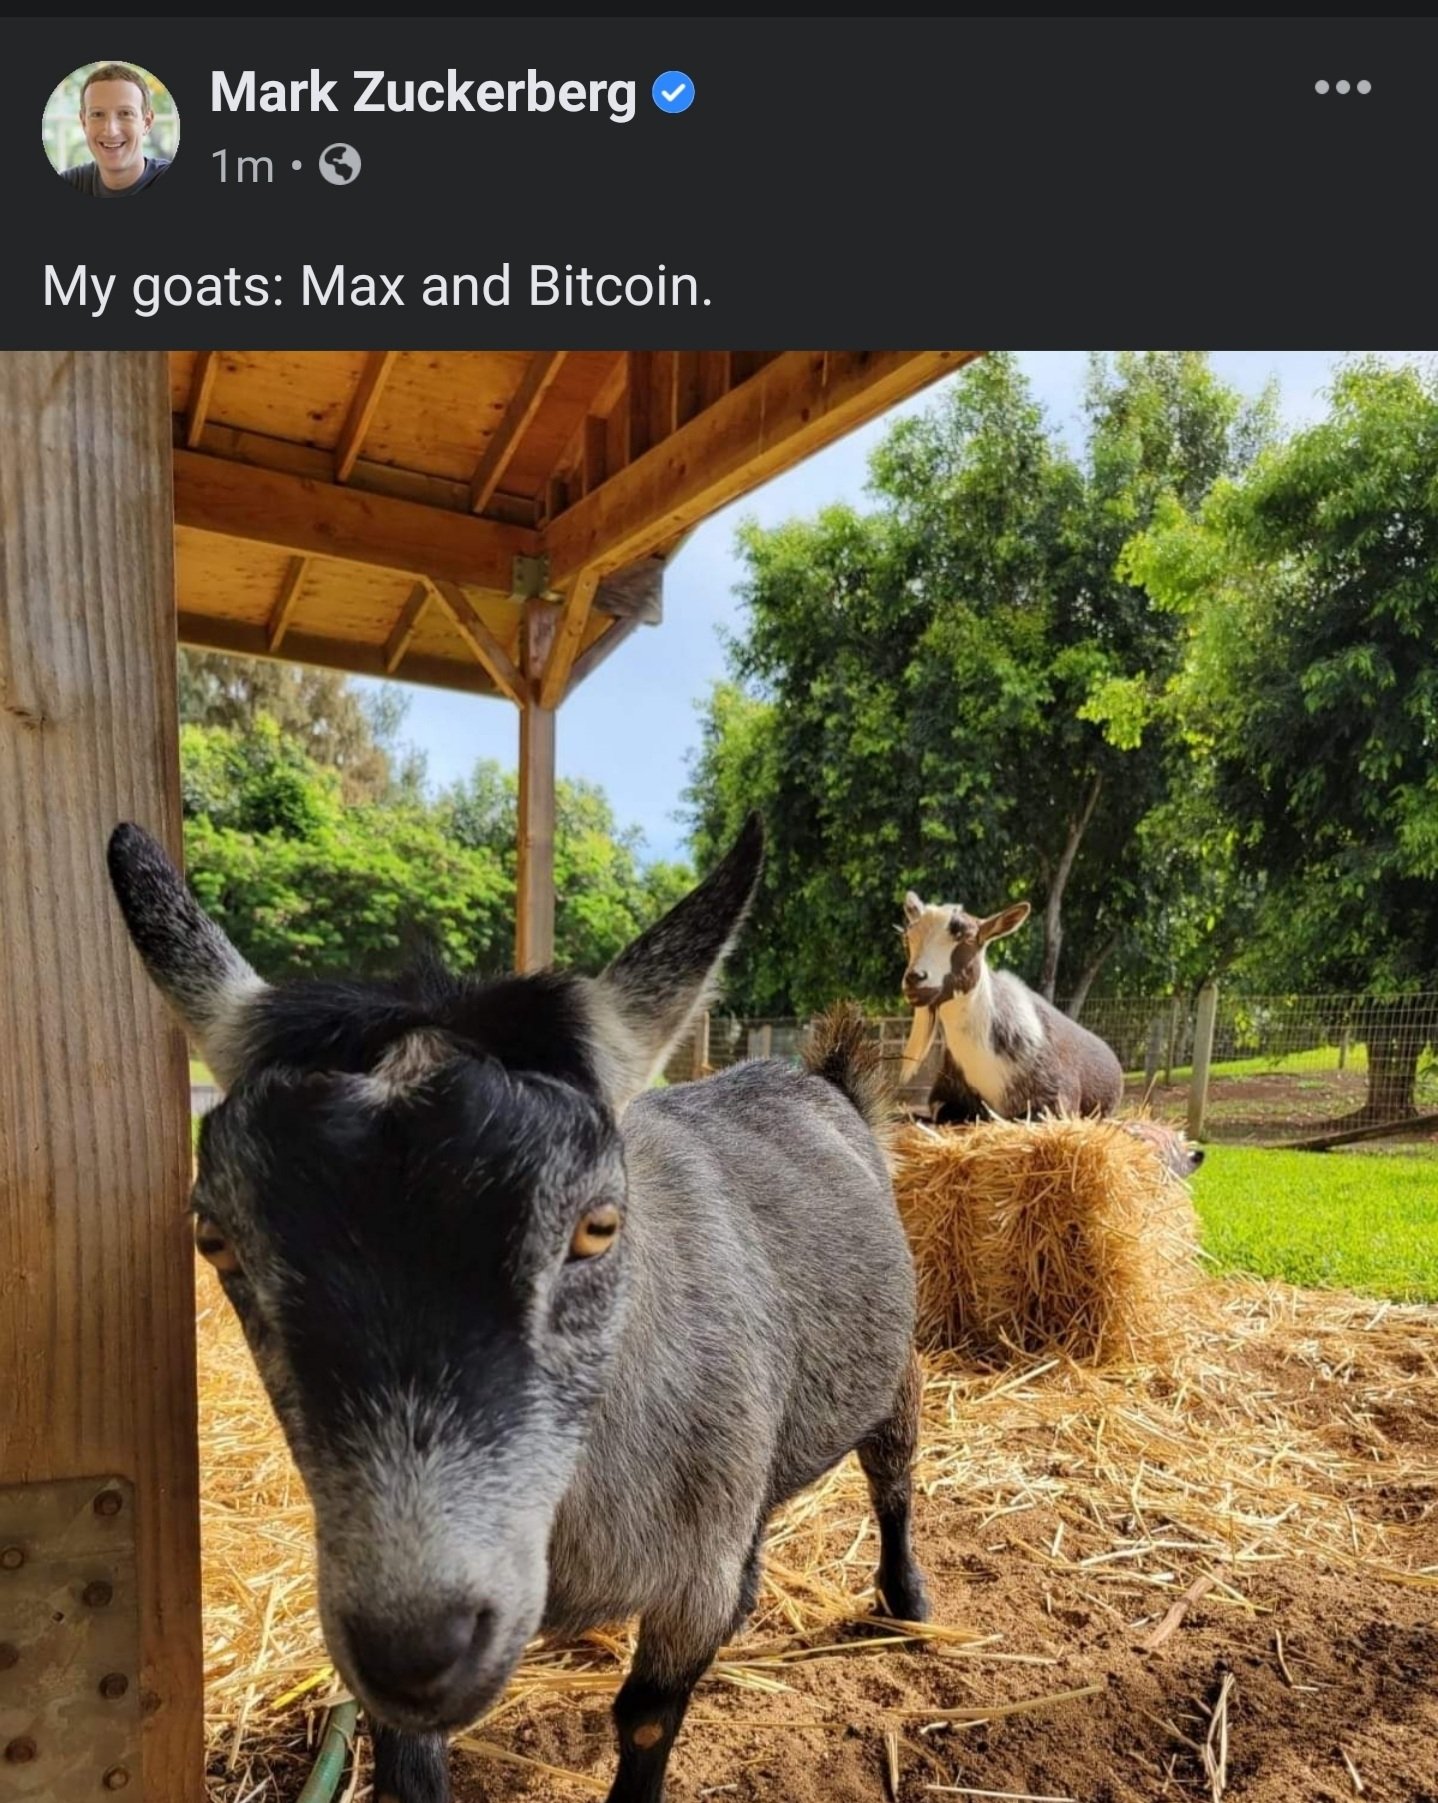 Blockworks on Twitter: "One of Mark Zuckerberg's goats is called #Bitcoin  https://t.co/acKU5A2mIc" / Twitter